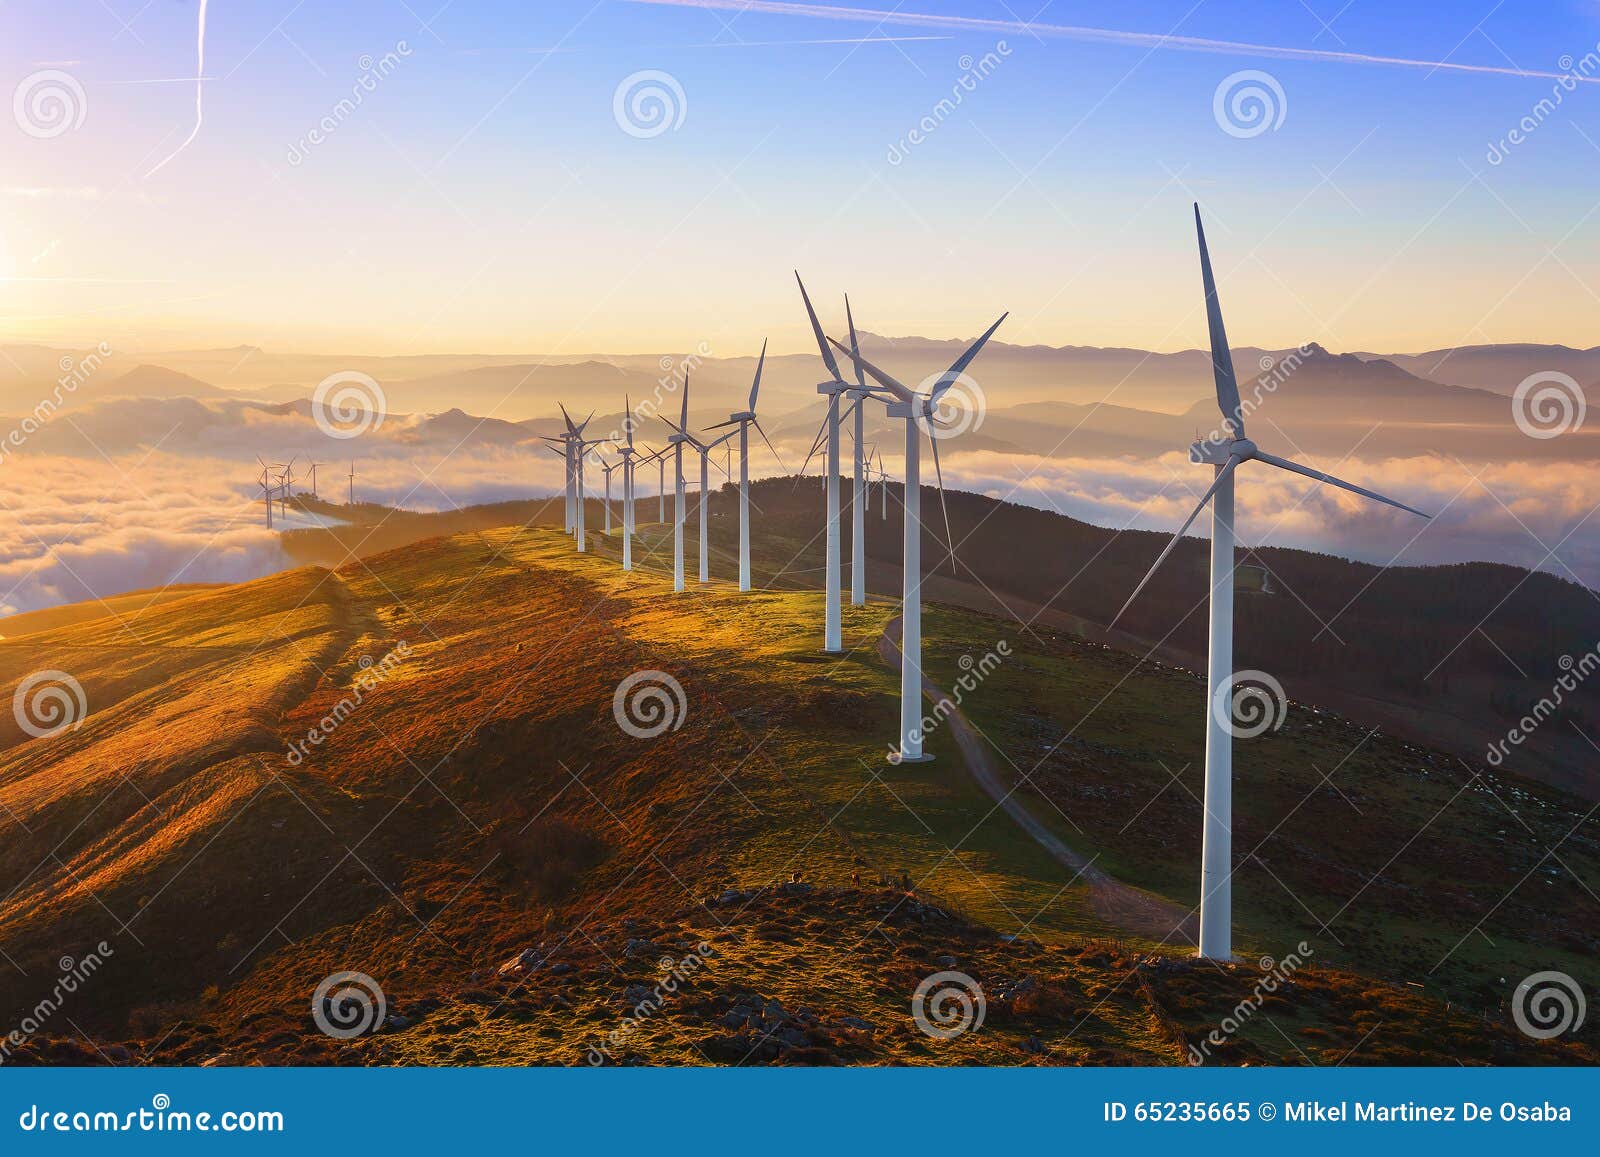 wind turbines in oiz eolic park